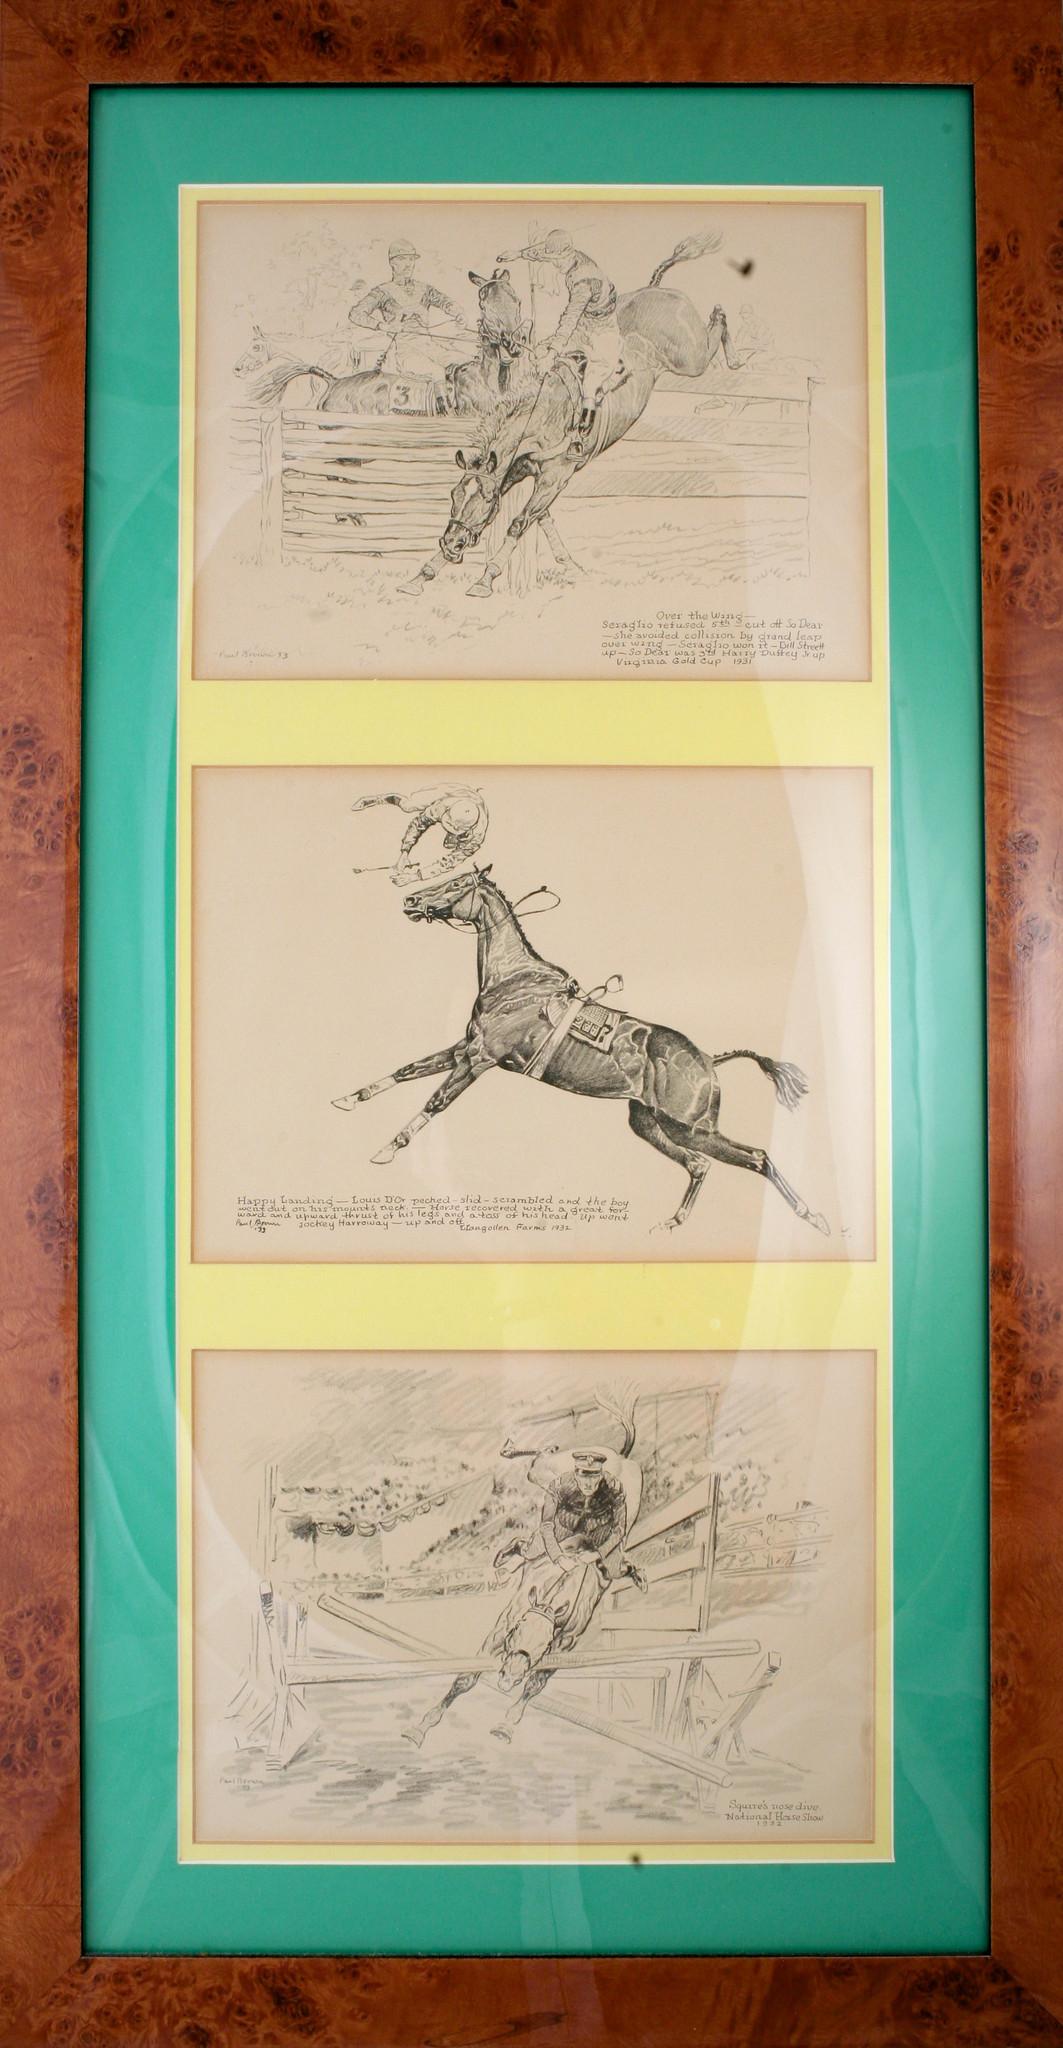 Virginia Gold Cup 1931/ Llangollen Farms & National Horse Show 1932 Triptych - Art by Paul Desmond Brown